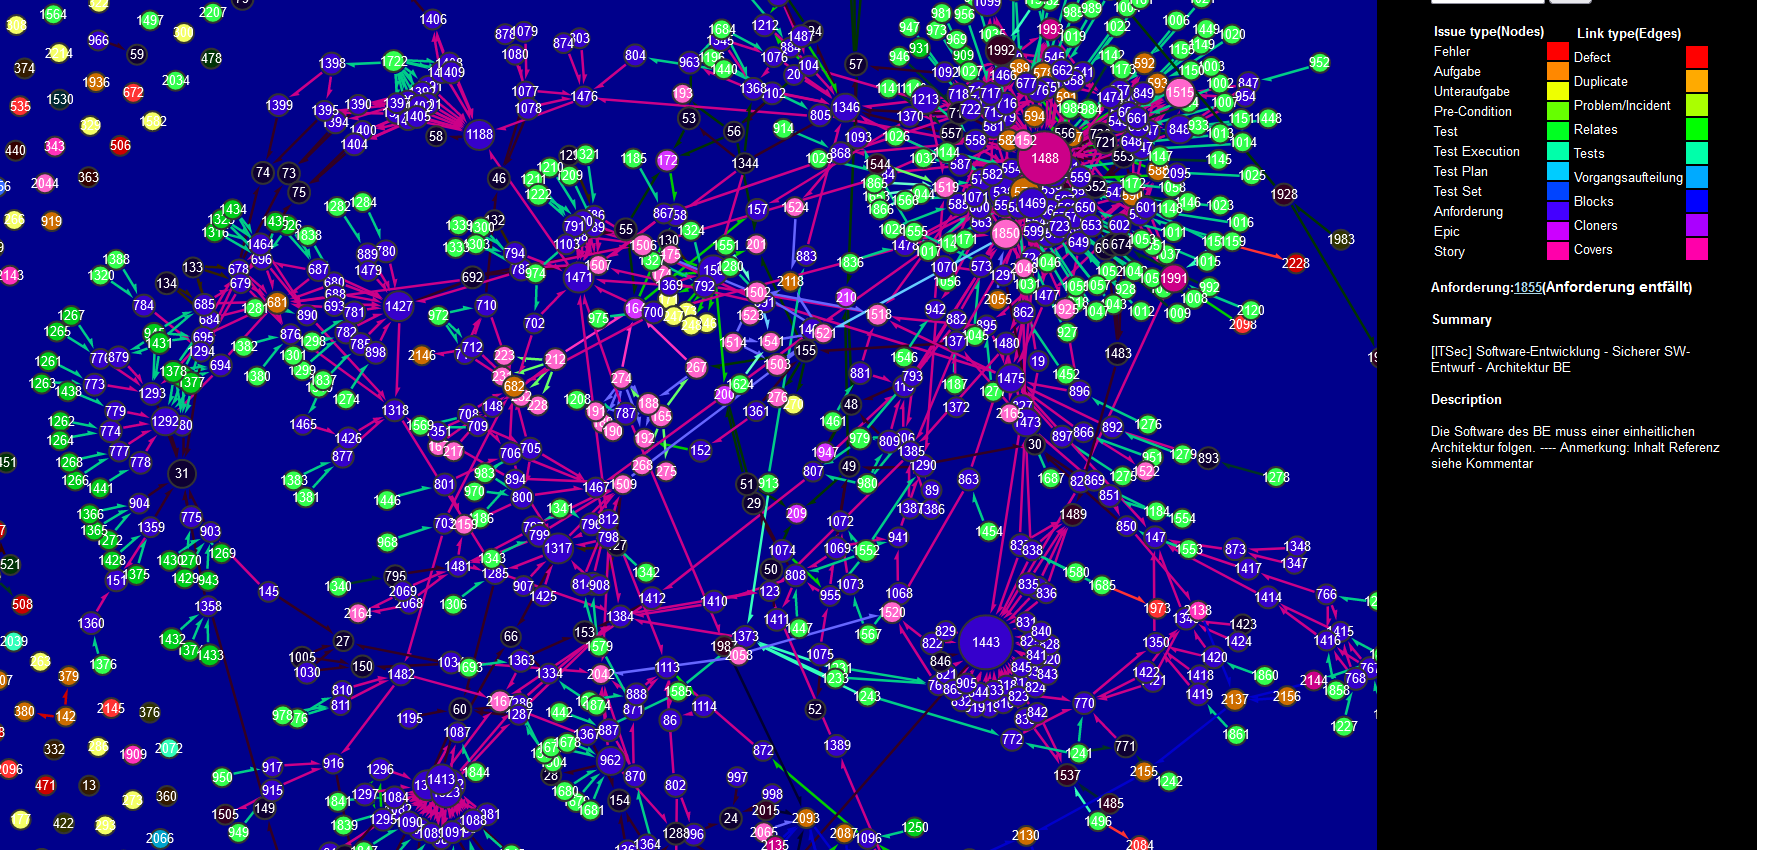 Jira issue graph snapshot of project Digitale Weiche 2 visualized via HTML5, Jinja2, Python and Jira-REST-API